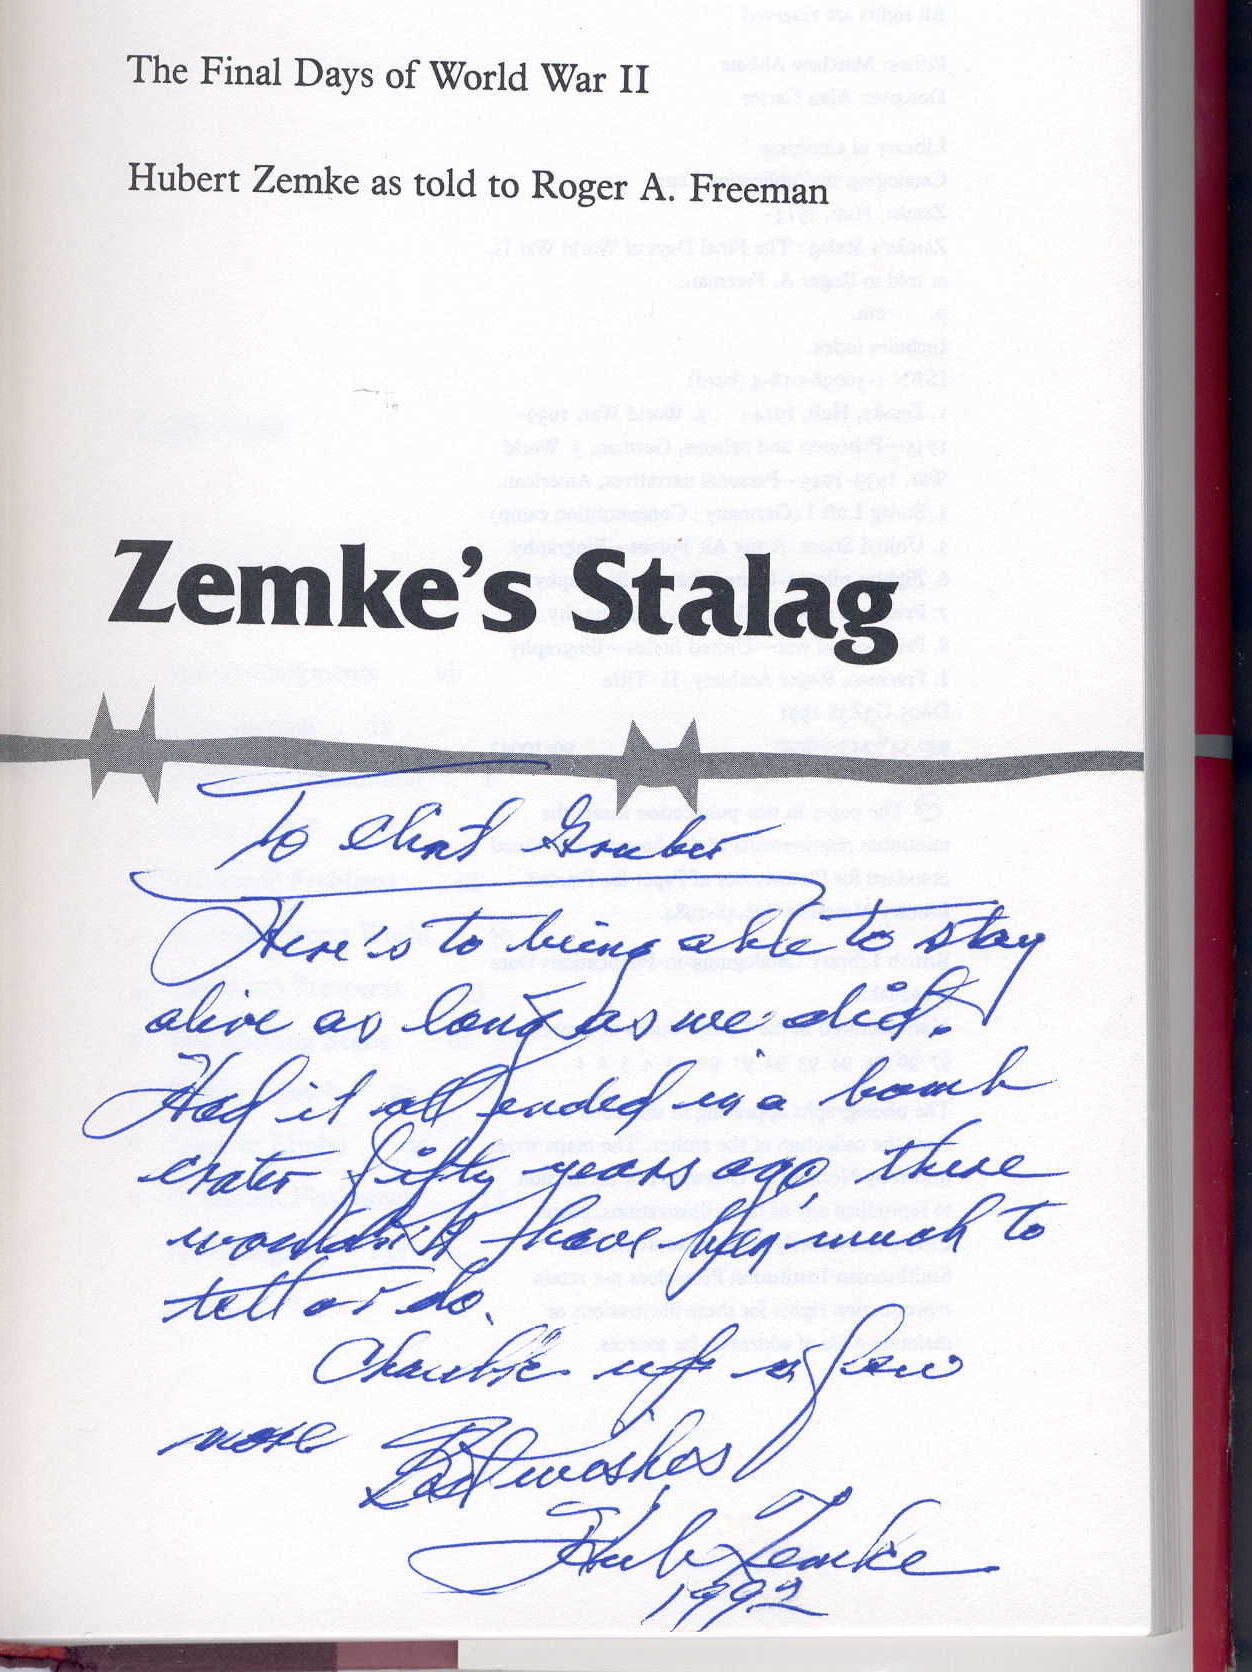 Autographed copy of Zemke's Stalag